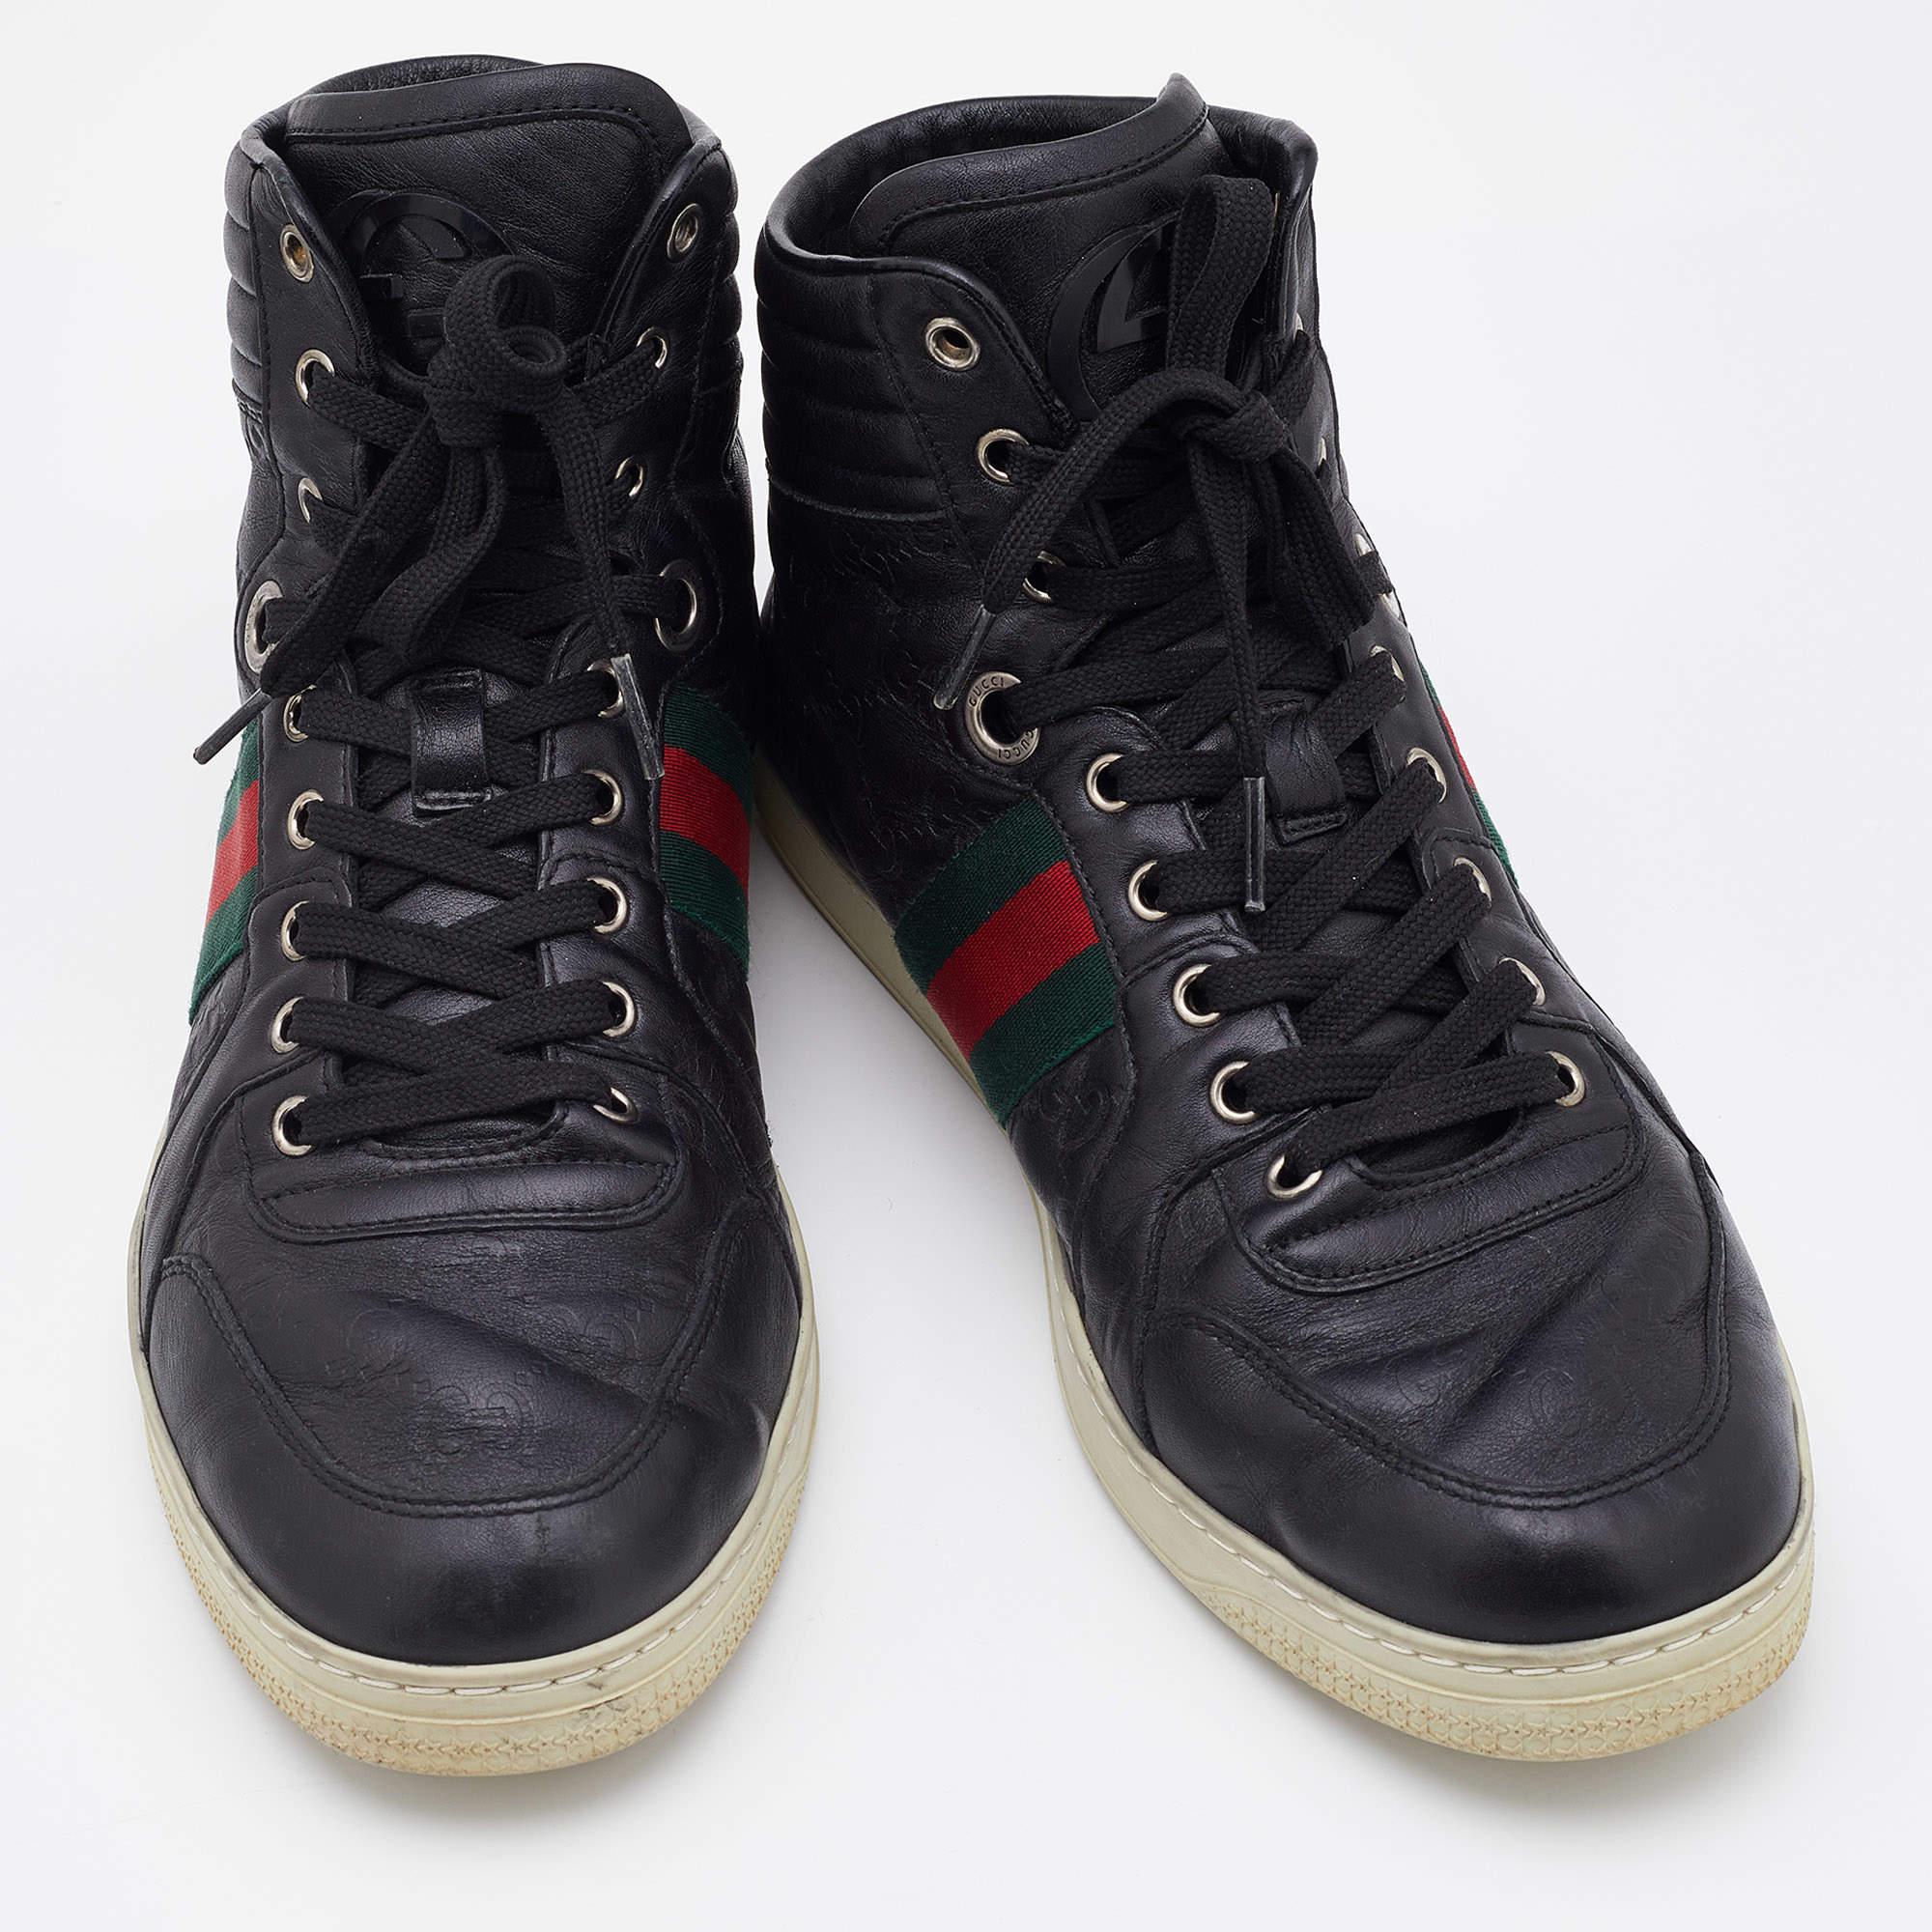 Gucci Black Guccissima Leather Web Detail High Top Sneakers Size 41.5 In Good Condition For Sale In Dubai, Al Qouz 2